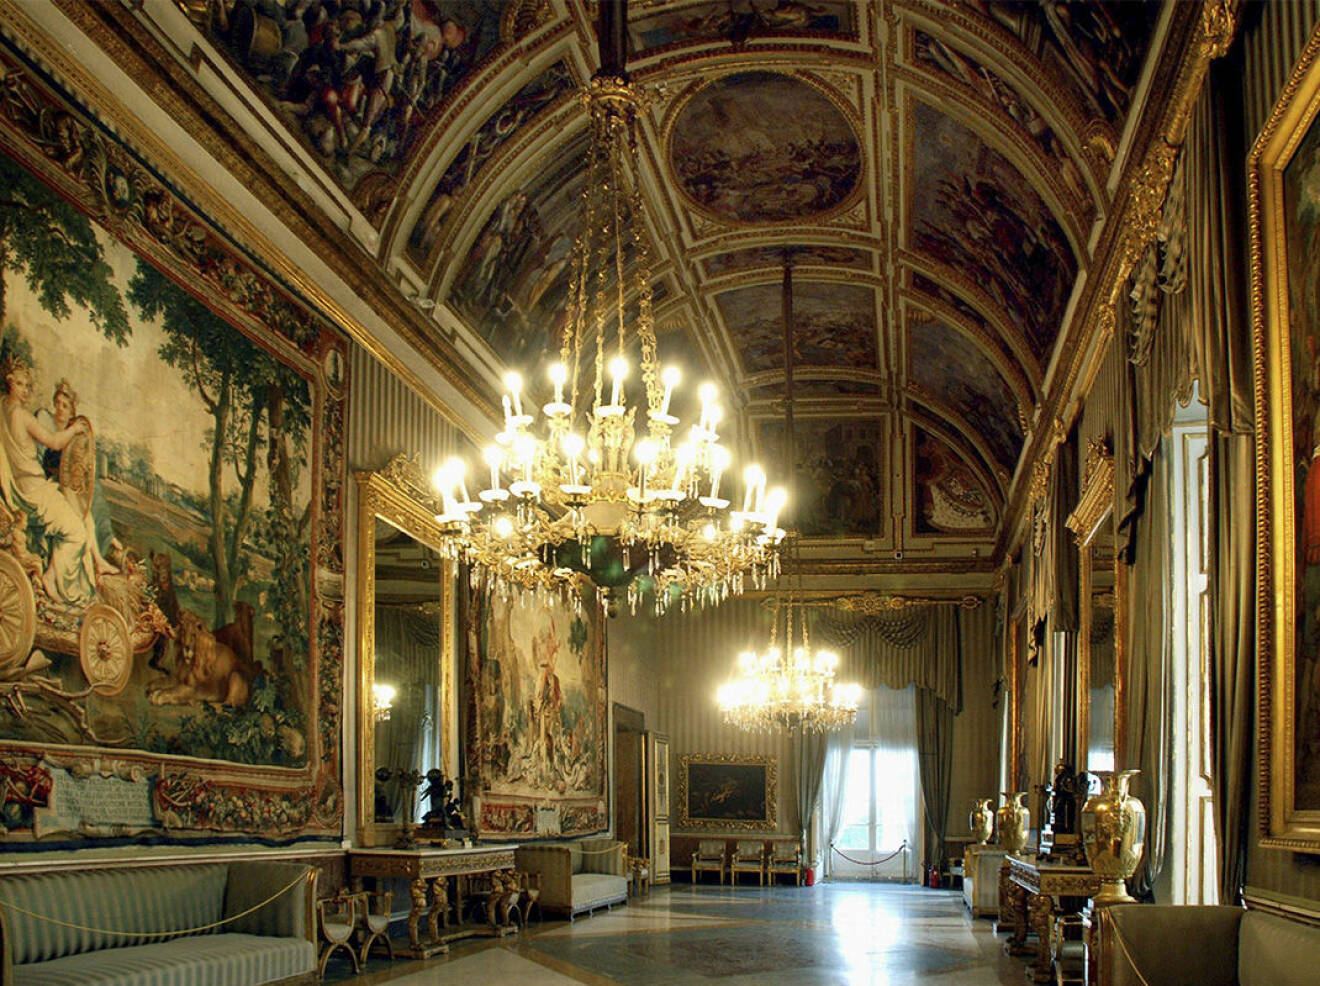 Palazzo Reale i Neapel ligger vackert på Piazza del Plebiscito